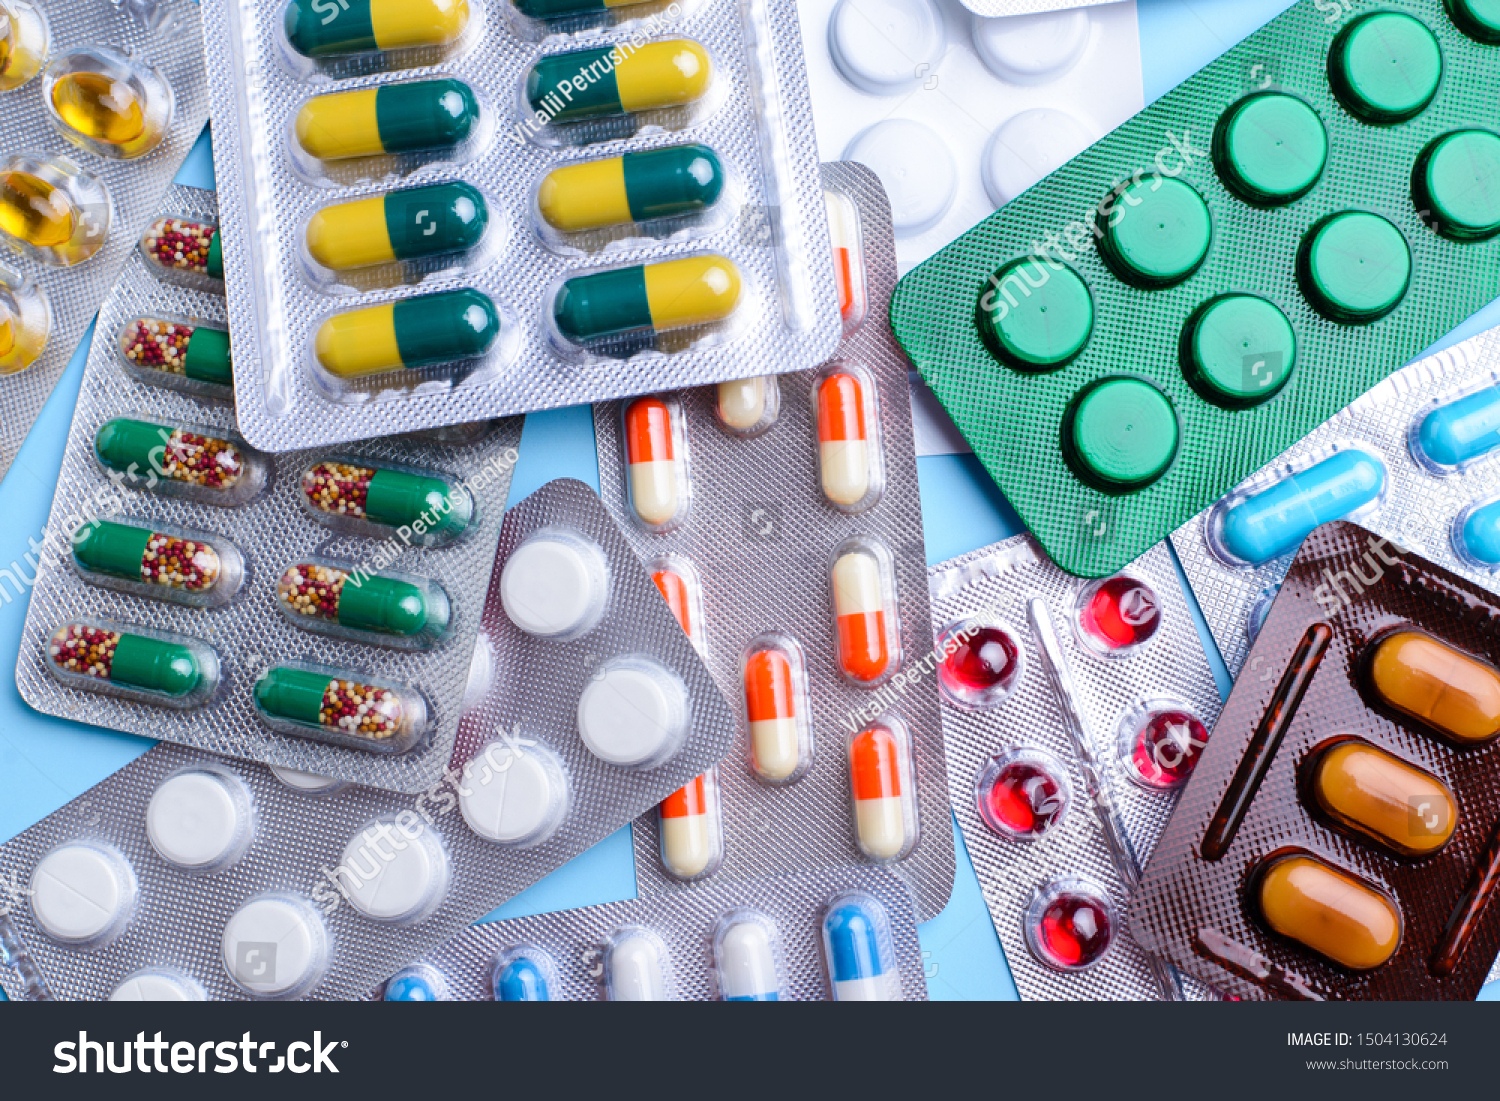 Different tablets, pills in foil blister packs, medications drugs on blue background #1504130624